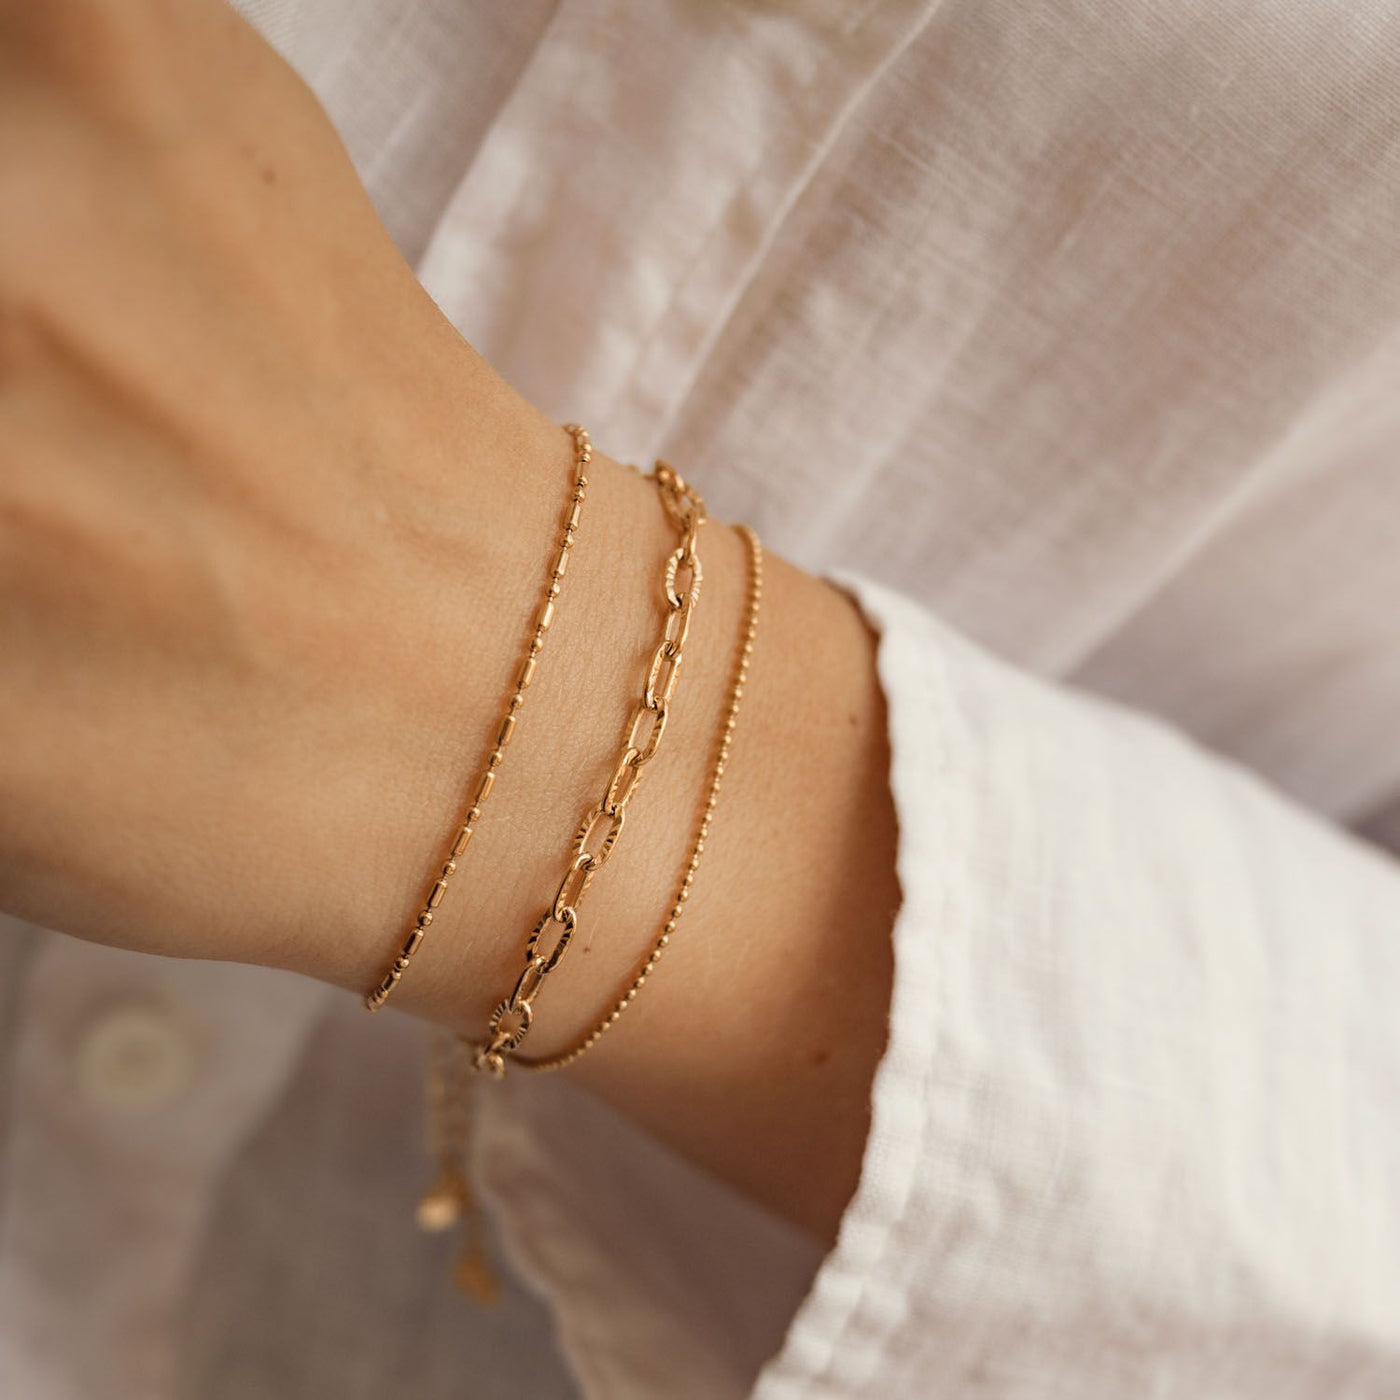 Textured Link Chain Bracelet Gold